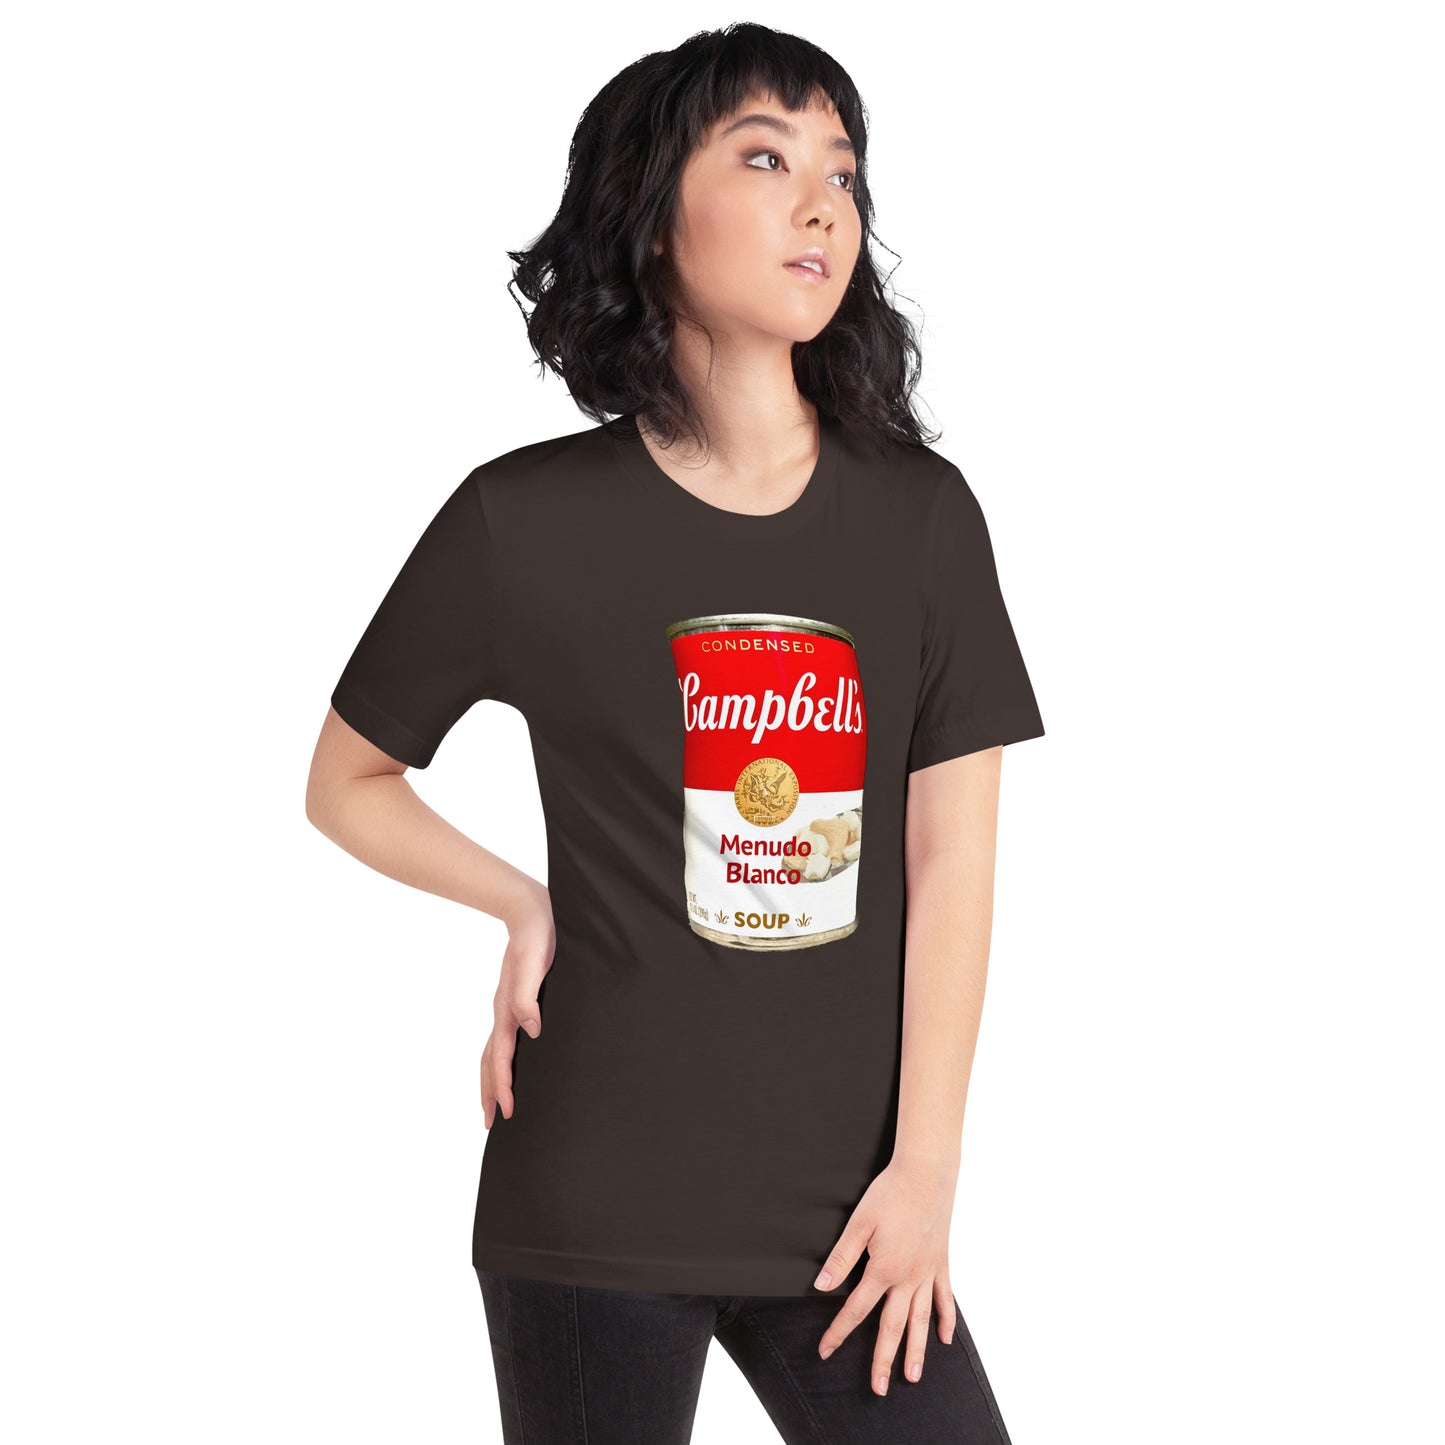 Snooty Fox Art Unisex T-shirt - Campbells Soup Menudo Blanco